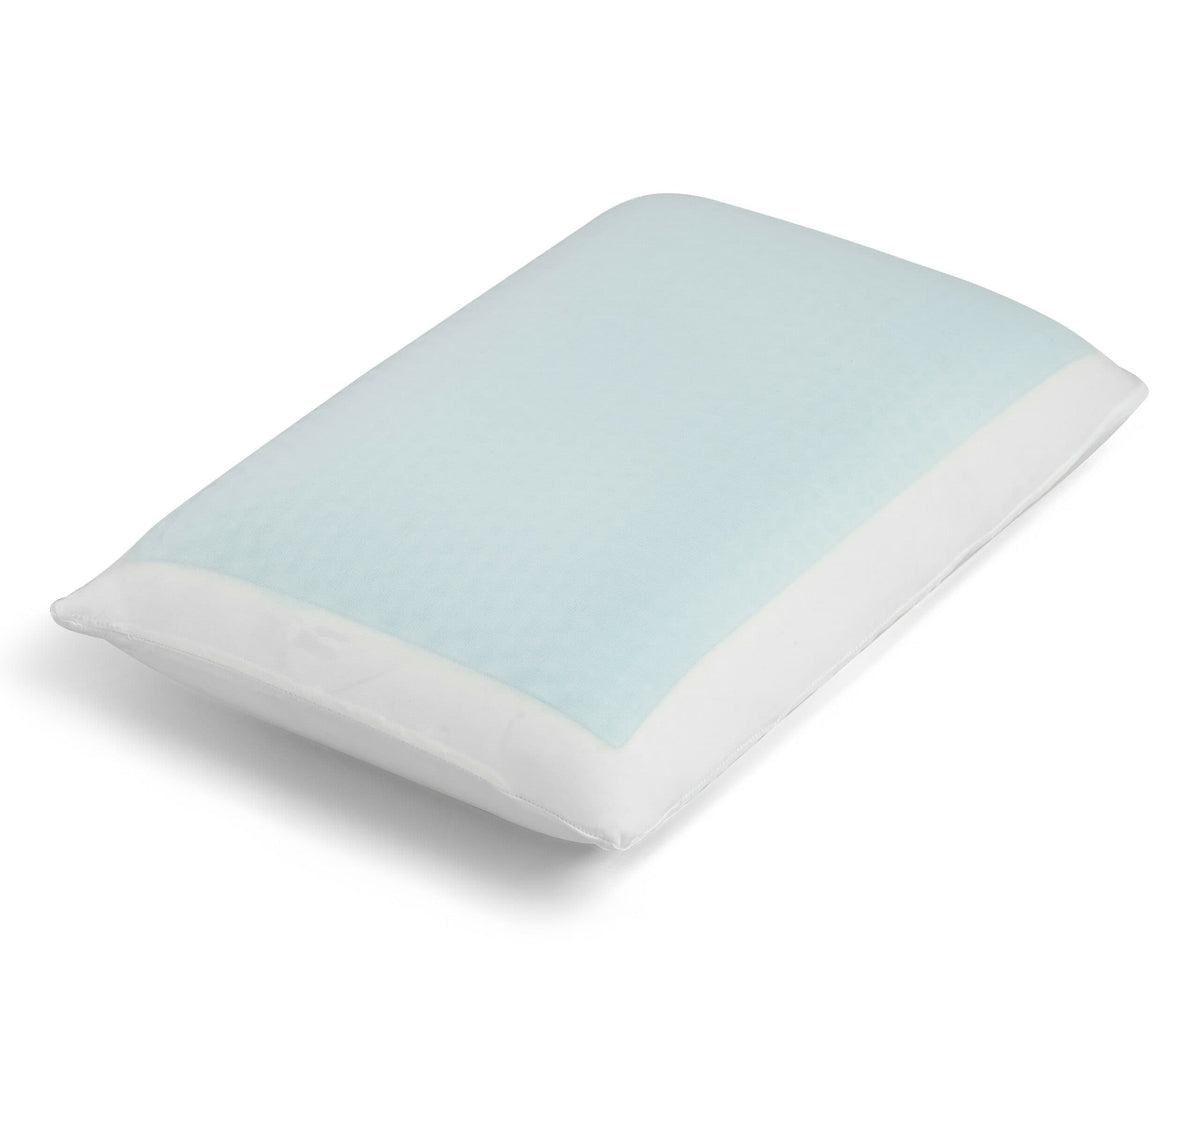 Cooling Memory Foam Gel Pillow- Soft